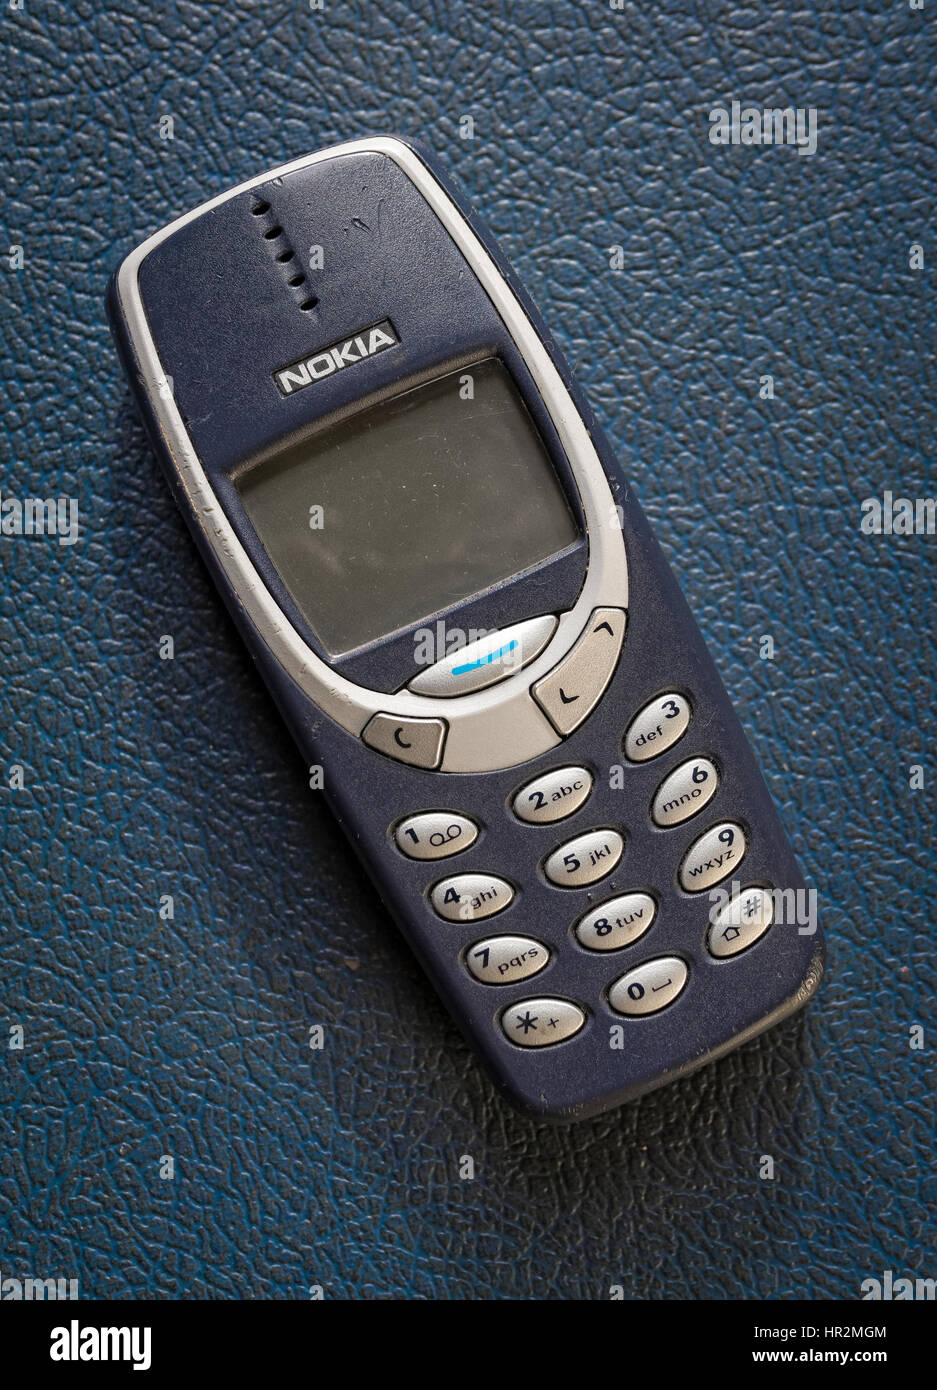 Nokia 3310 Mobile Phone, One of Nokia's most popular phones Stock Photo